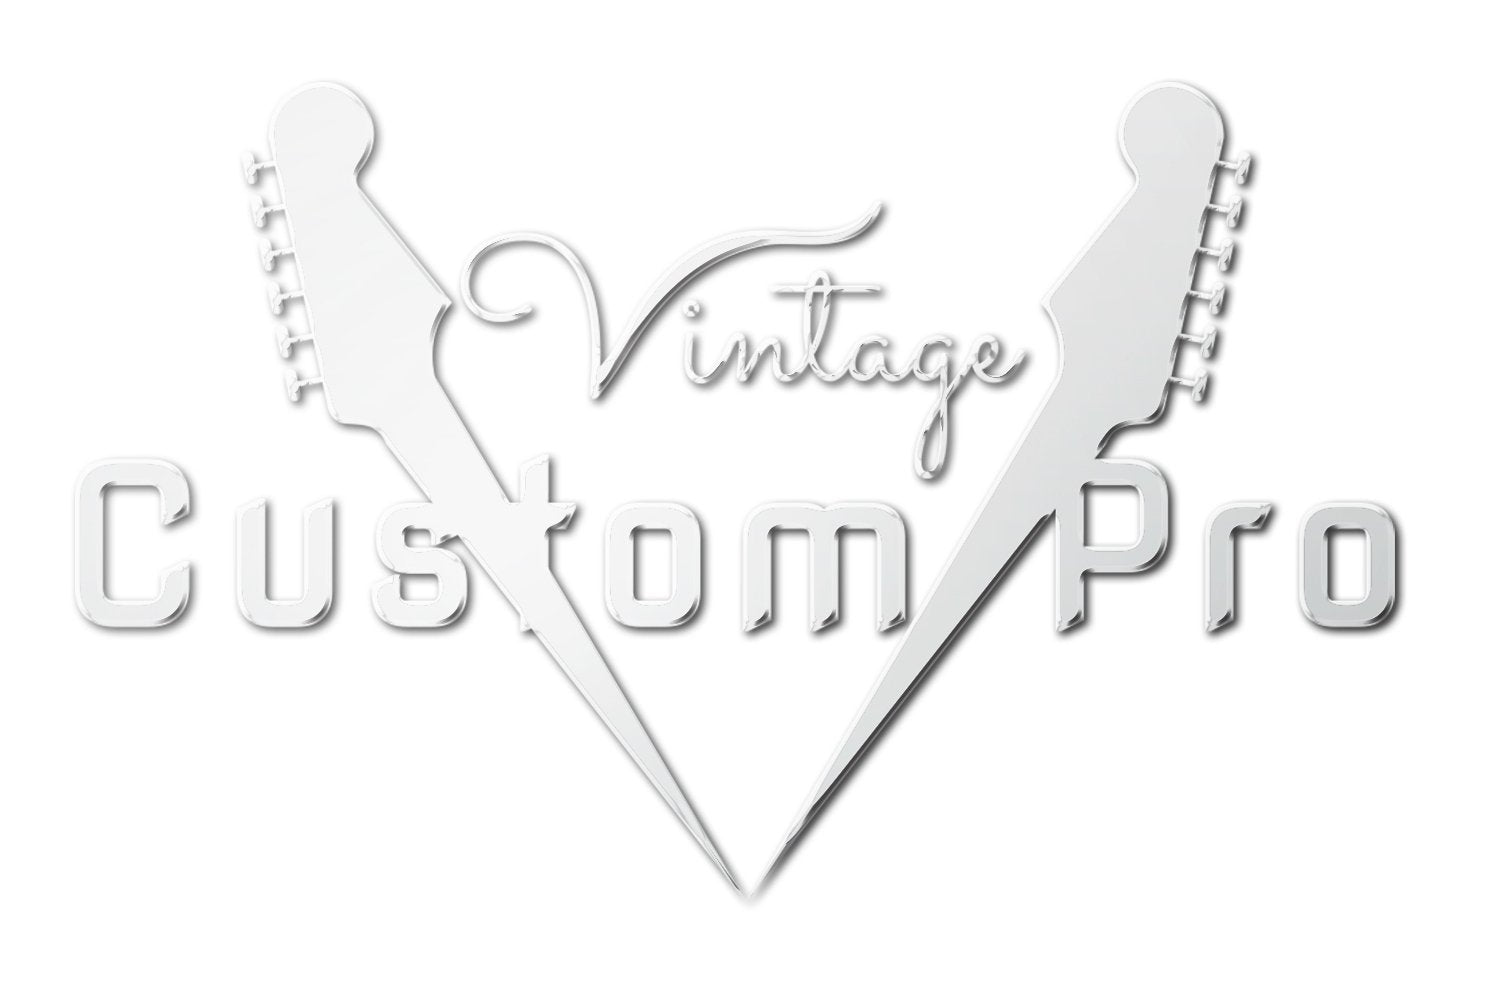 Vintage* VS6VCR Electric Guitar, Electric Guitar for sale at Richards Guitars.